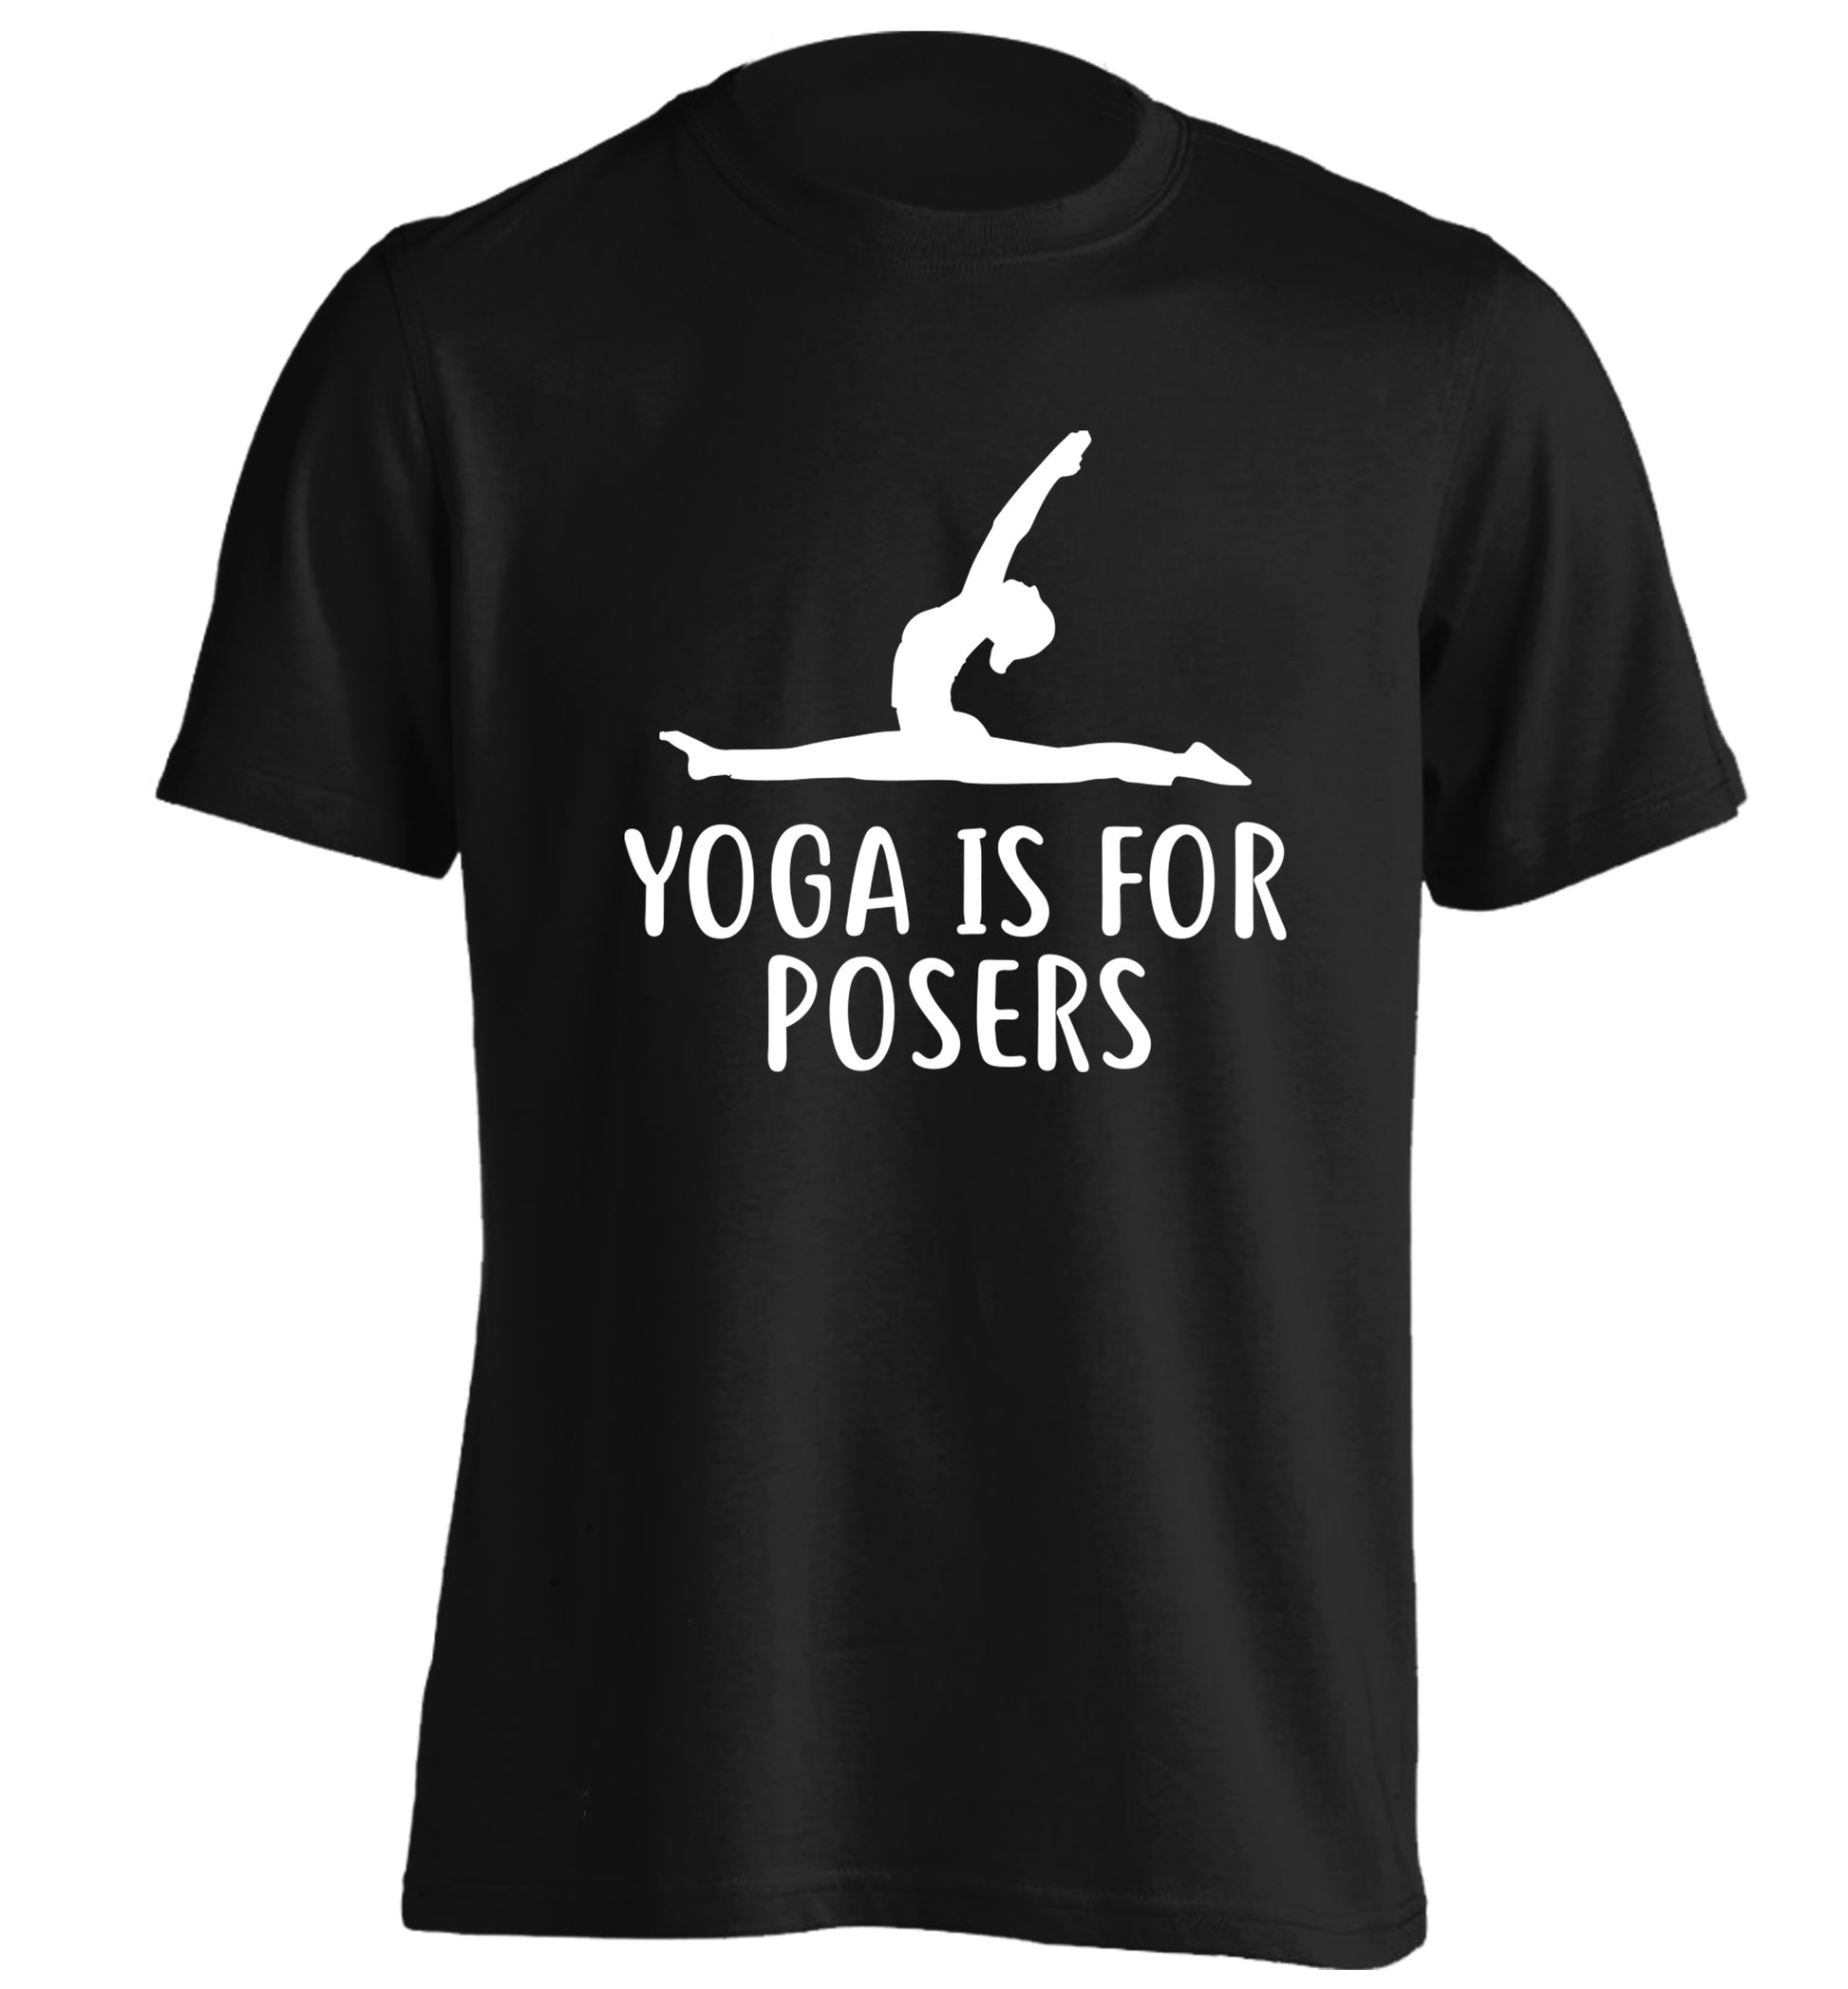 Yoga is for posers adults unisex black Tshirt 2XL